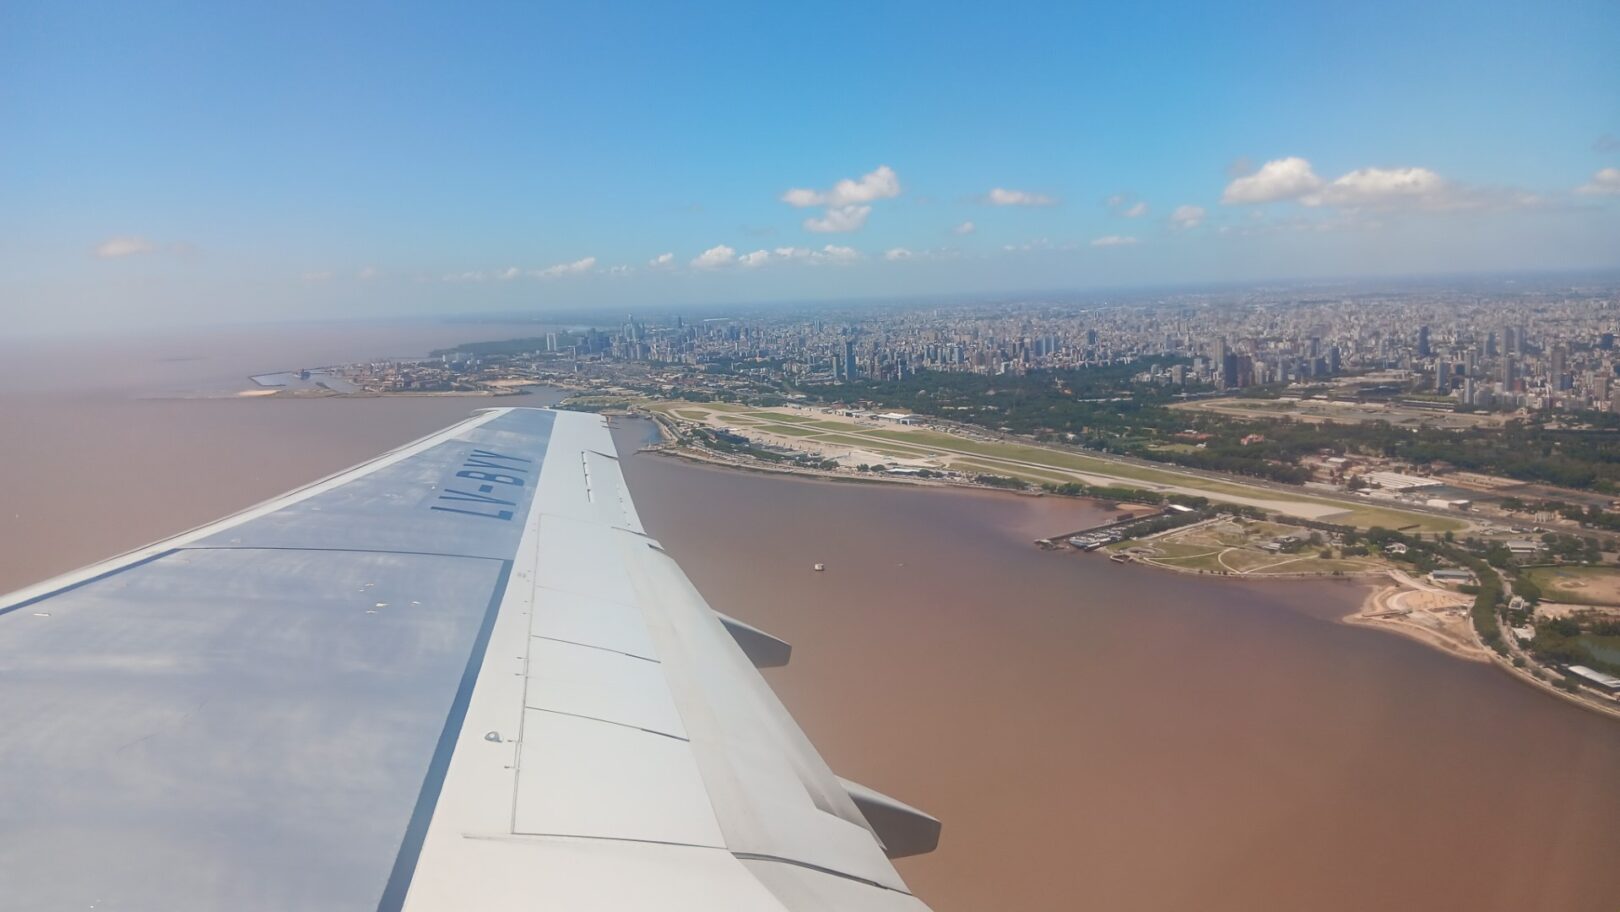 AR 1736 Buenos Aires-Puerto Iguazú, taking off in Buenos Aires